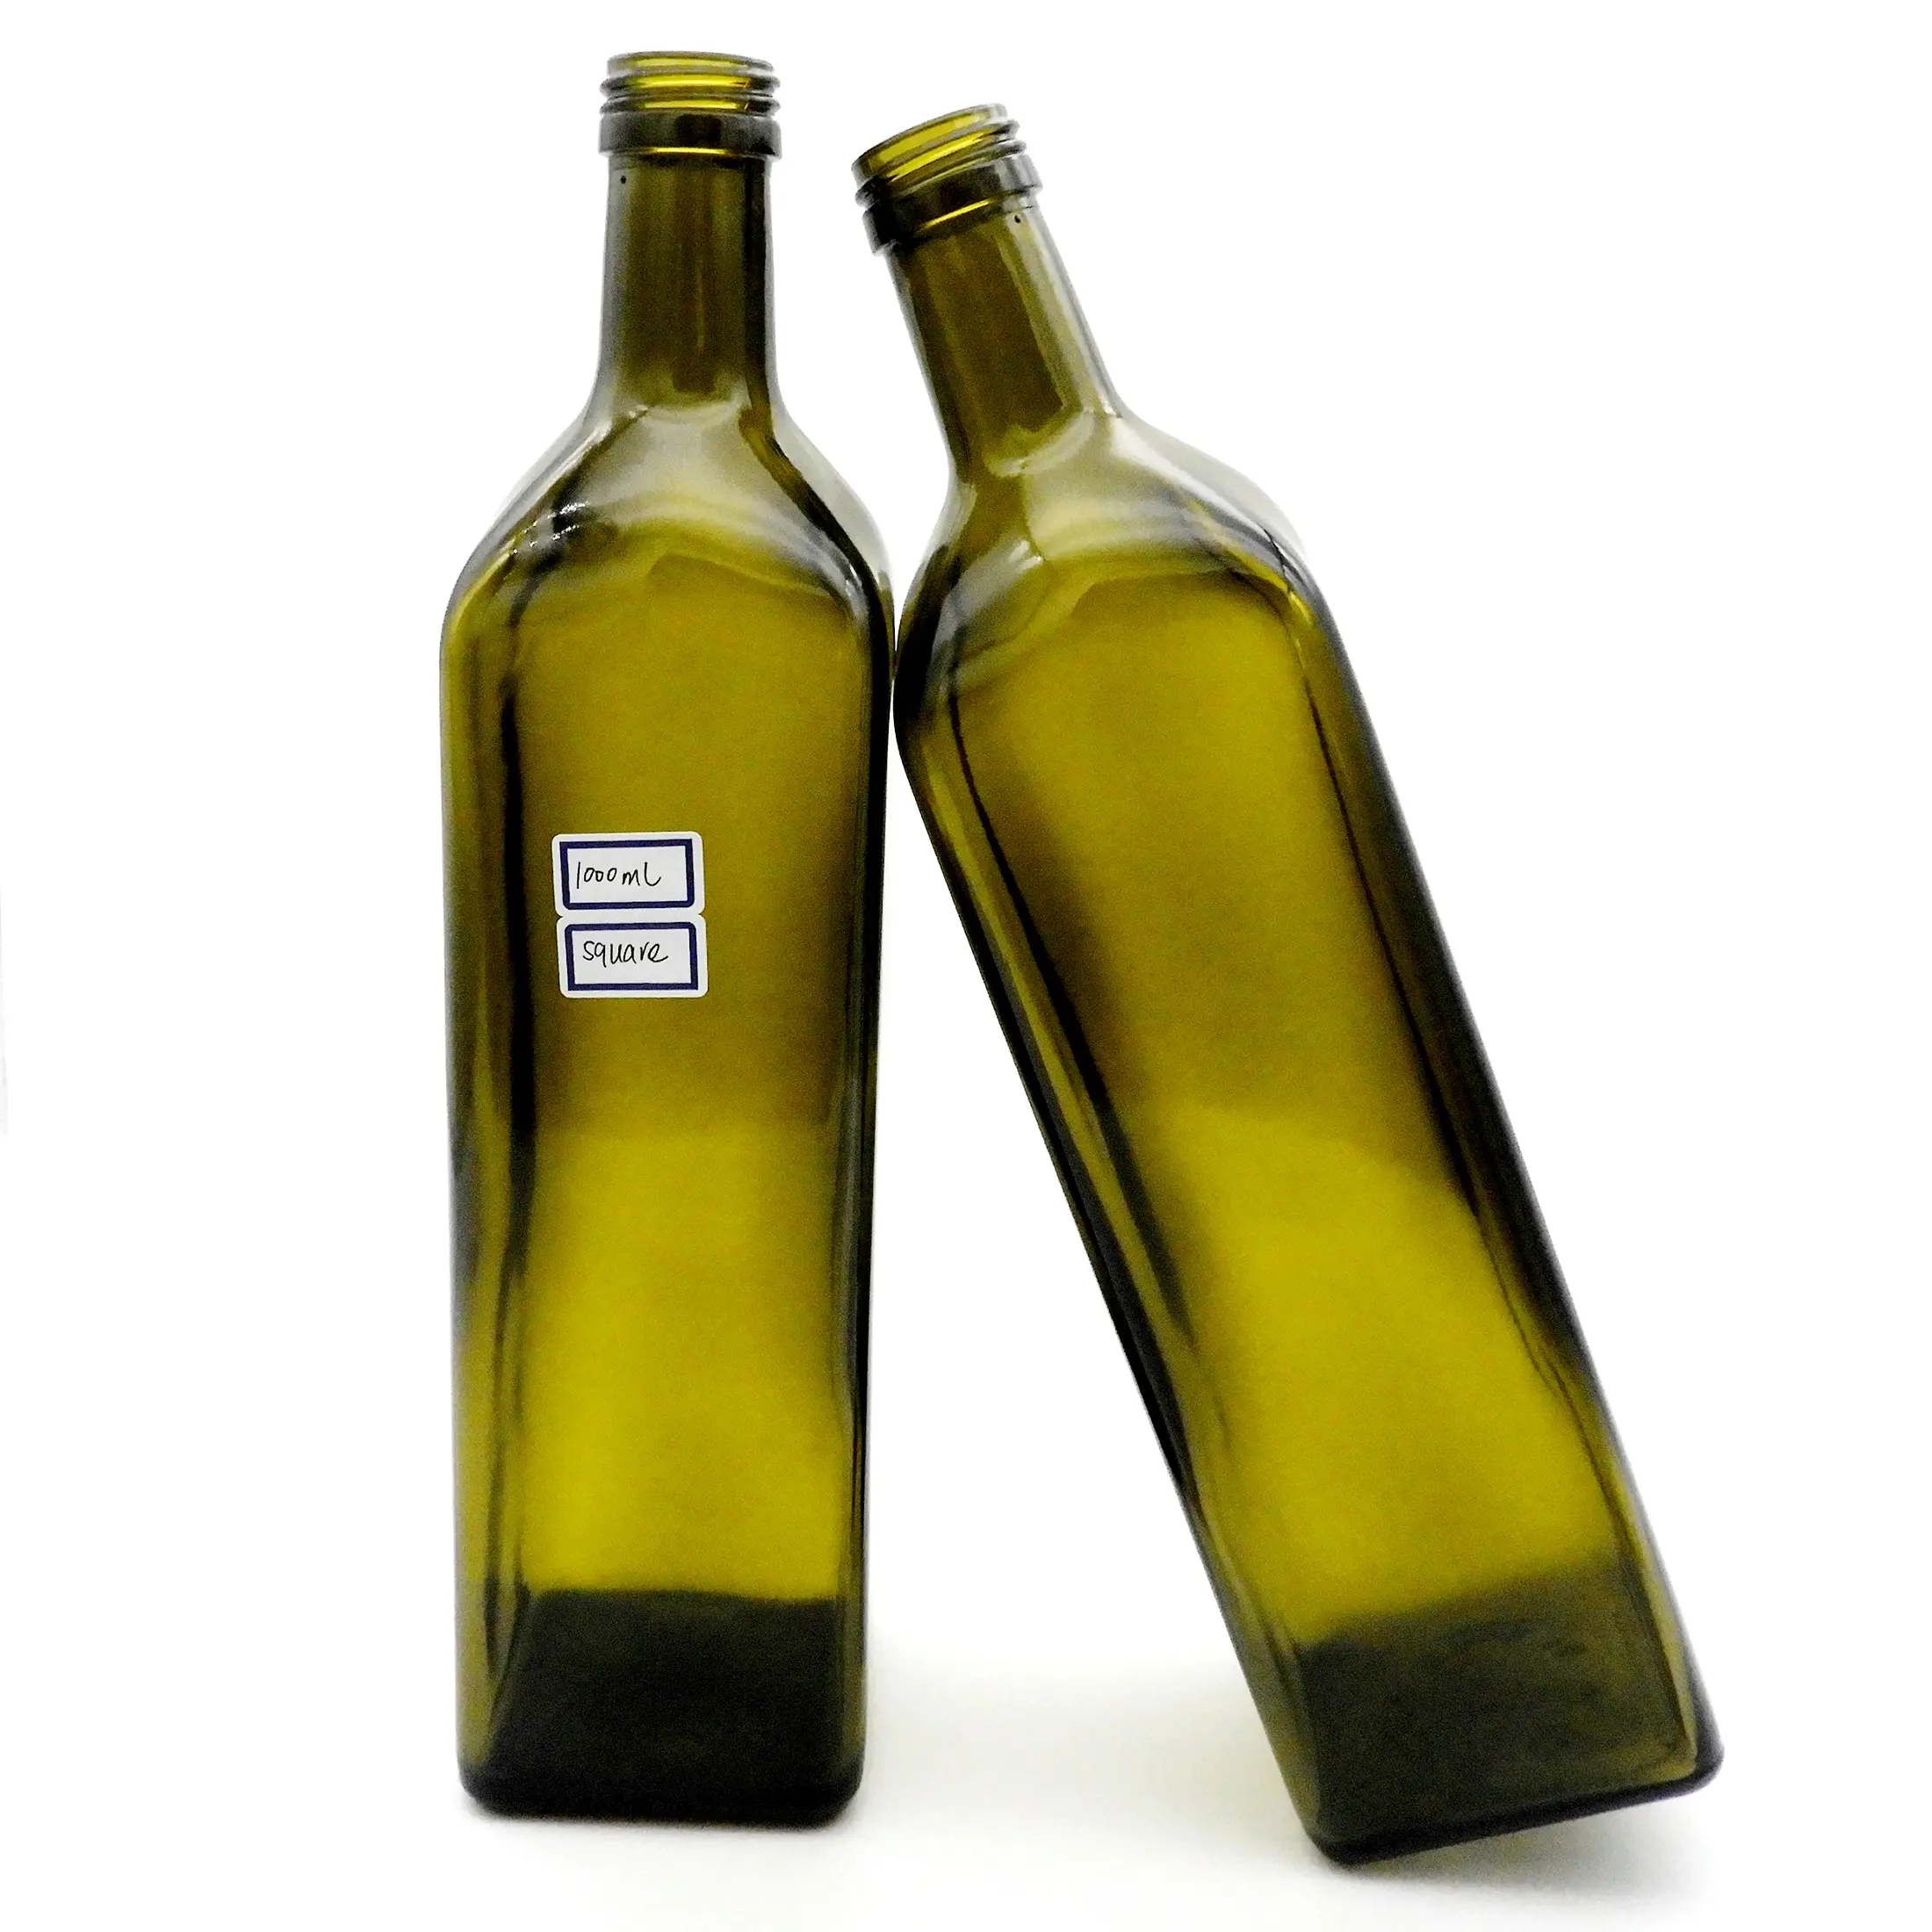 Botol minyak zaitun kaca 1000ml produsen 1 Liter Marasca minyak zaitun grosir botol